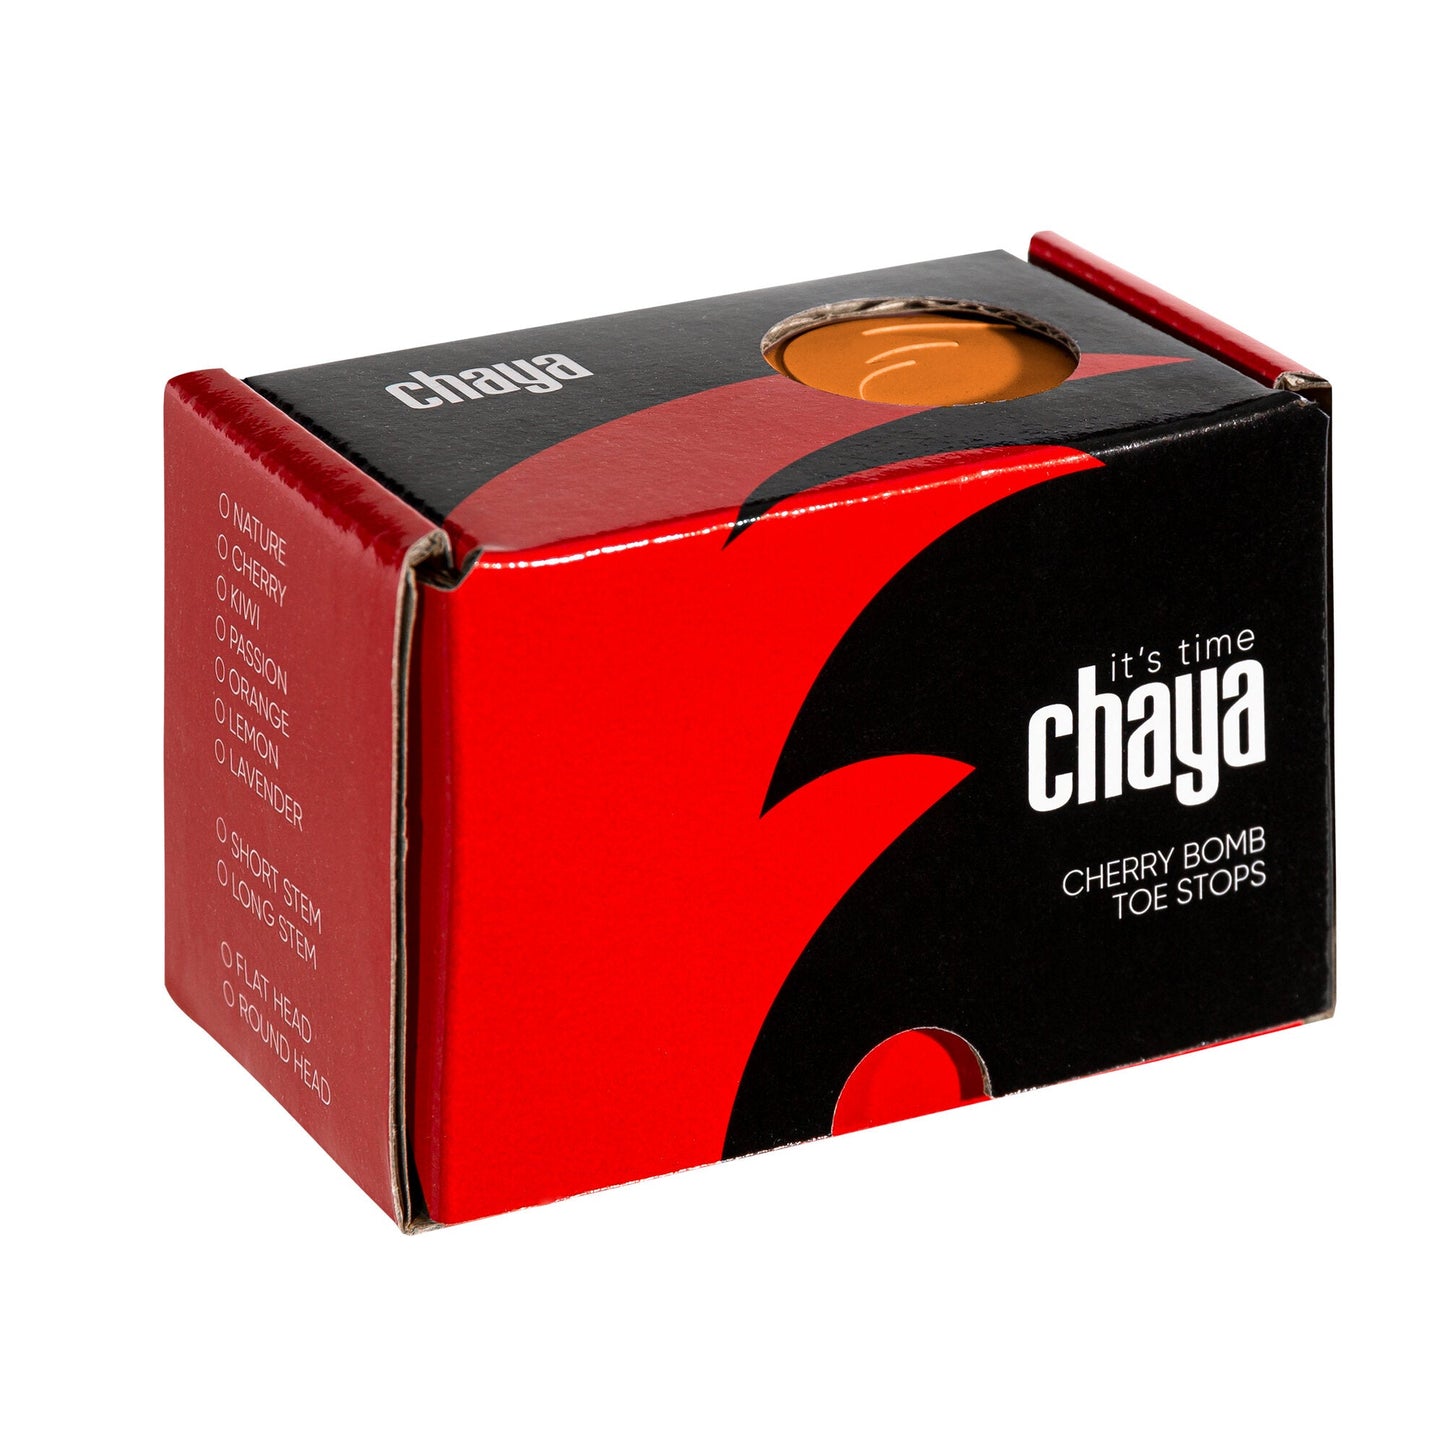 Chaya Cherry Bomb Toe Stop for rollerskates, color orange, short stem